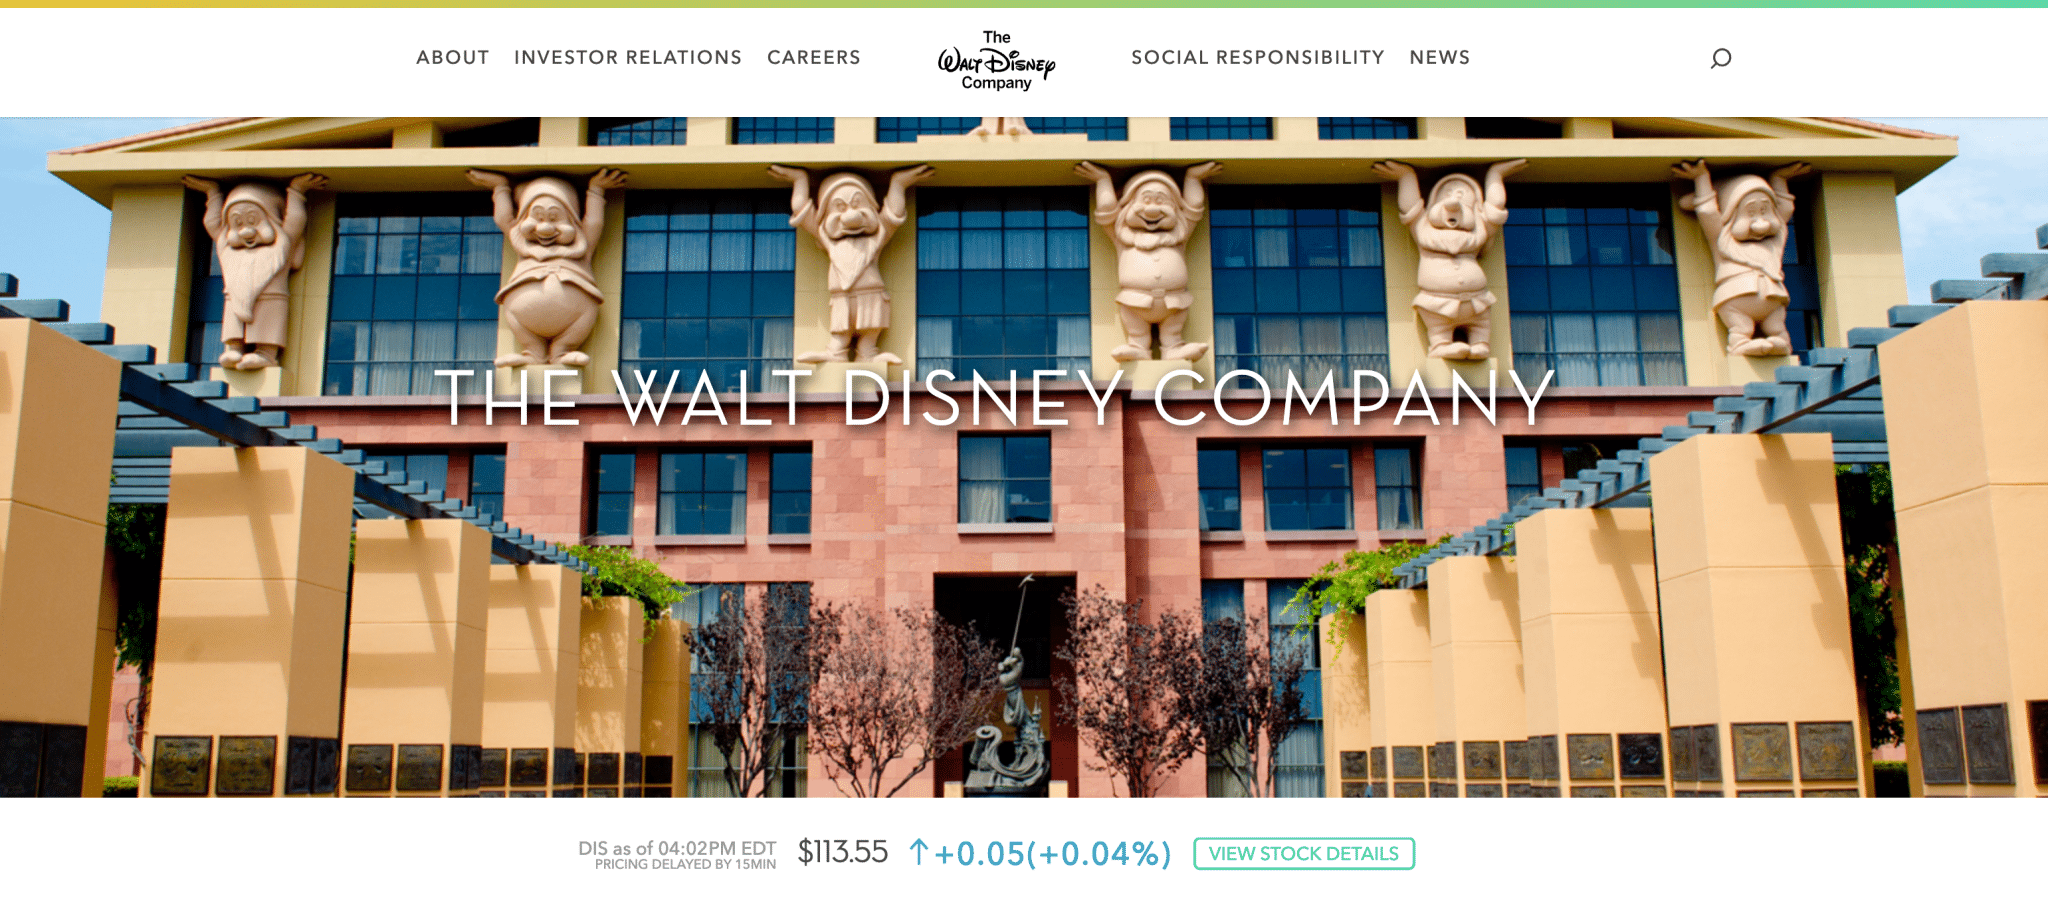 The Walt Disney Company website is hosted on WordPress.